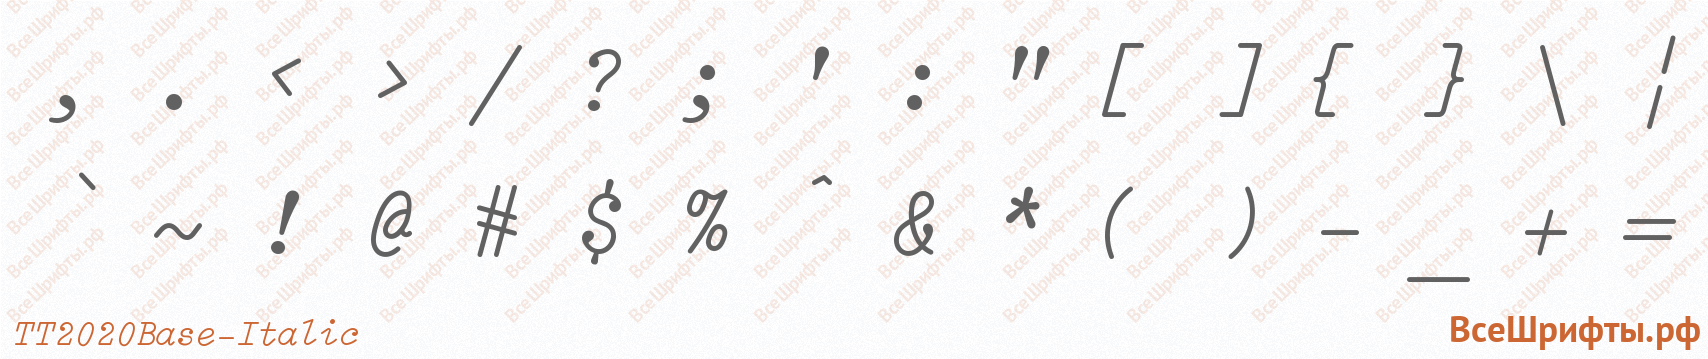 Шрифт TT2020 Base Style Italic со знаками препинания и пунктуации